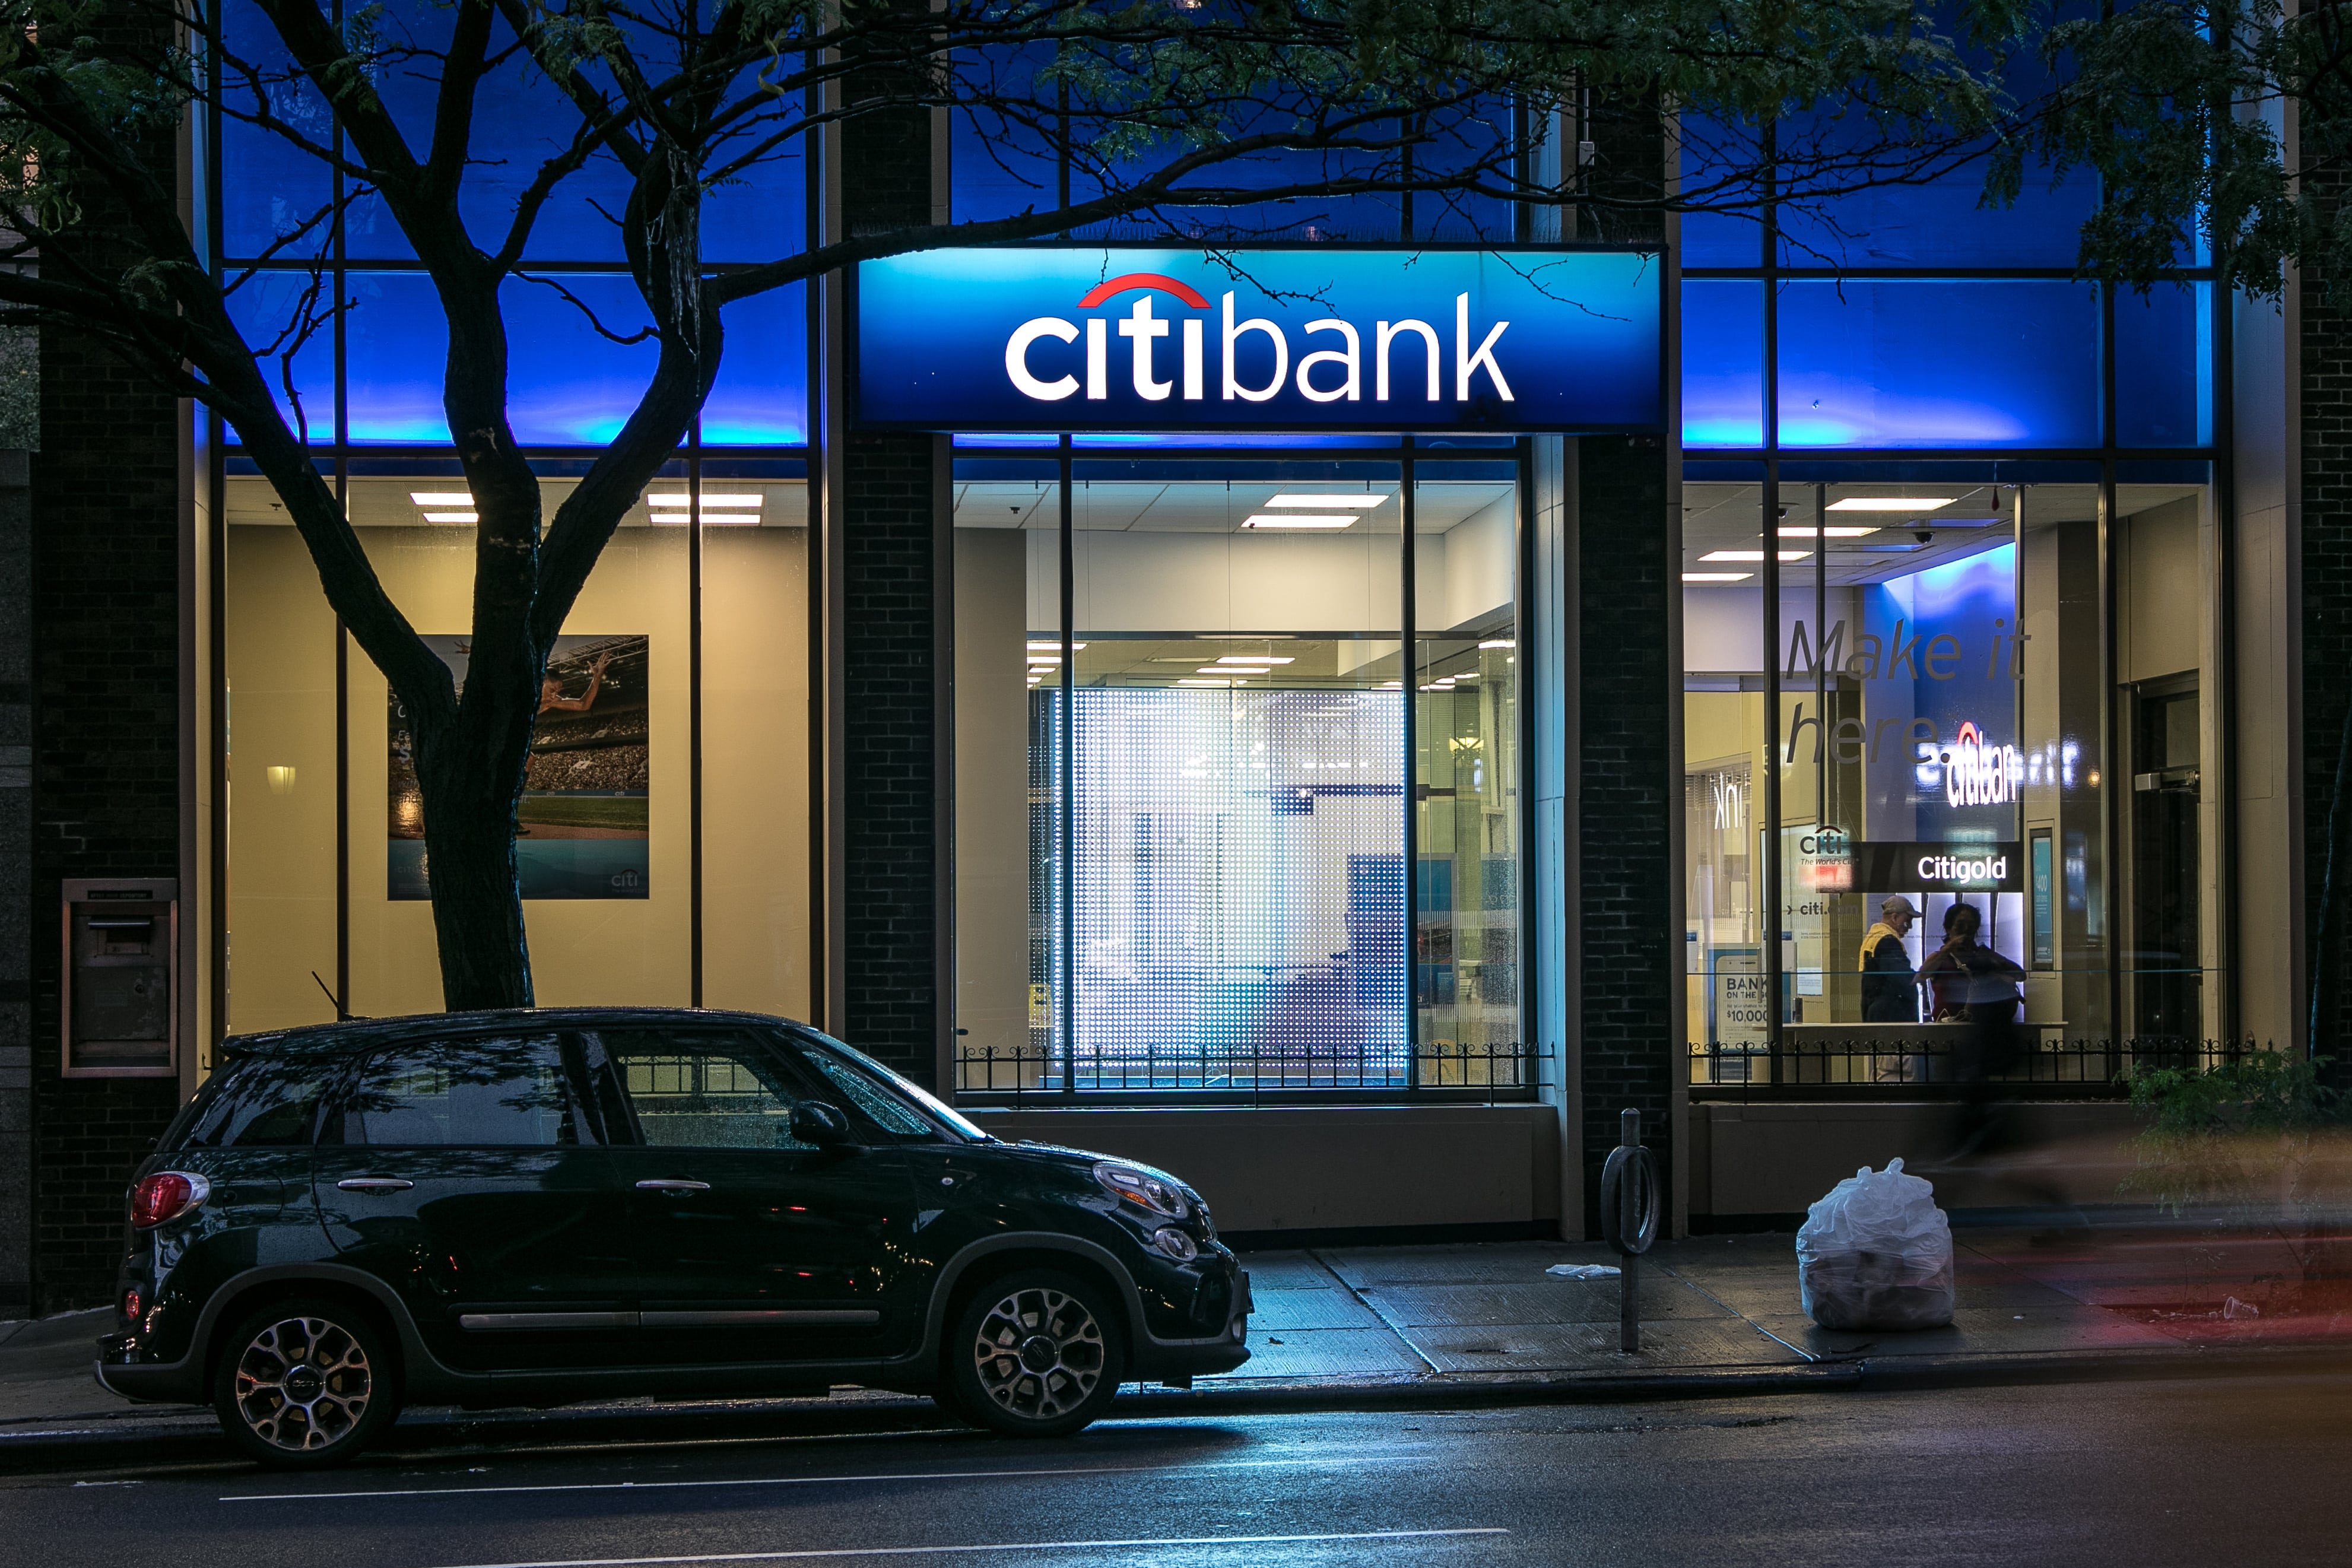 Citibank set to exit India, sheds light on battle for market share